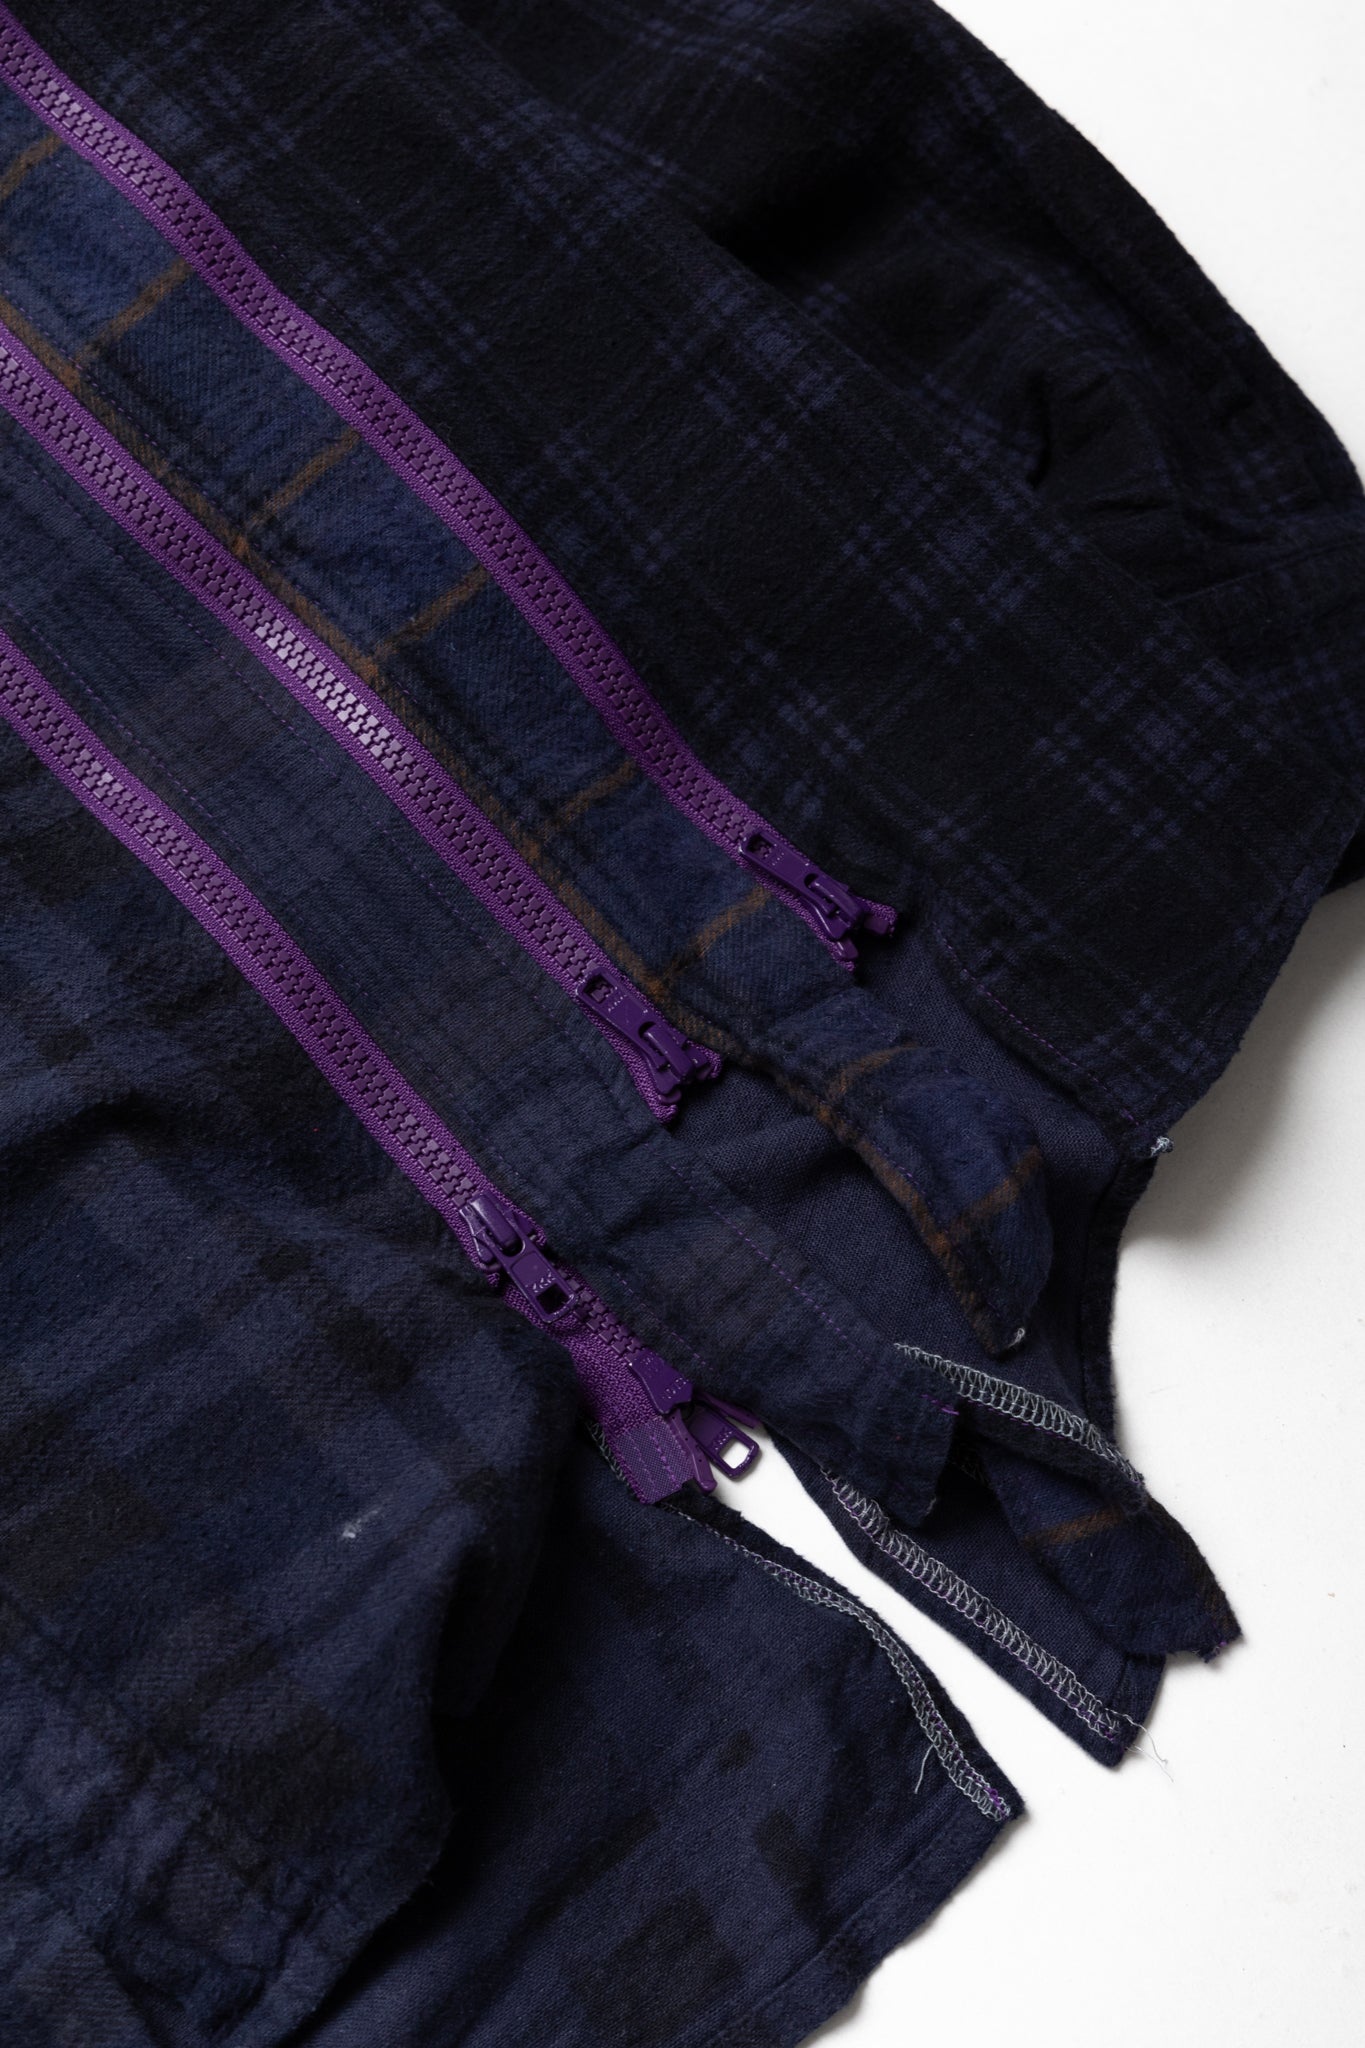 [Rebuild by Needles] Flannel Shirt -> 7 Cuts Zipped Wide Shirt Over Dye - Purple